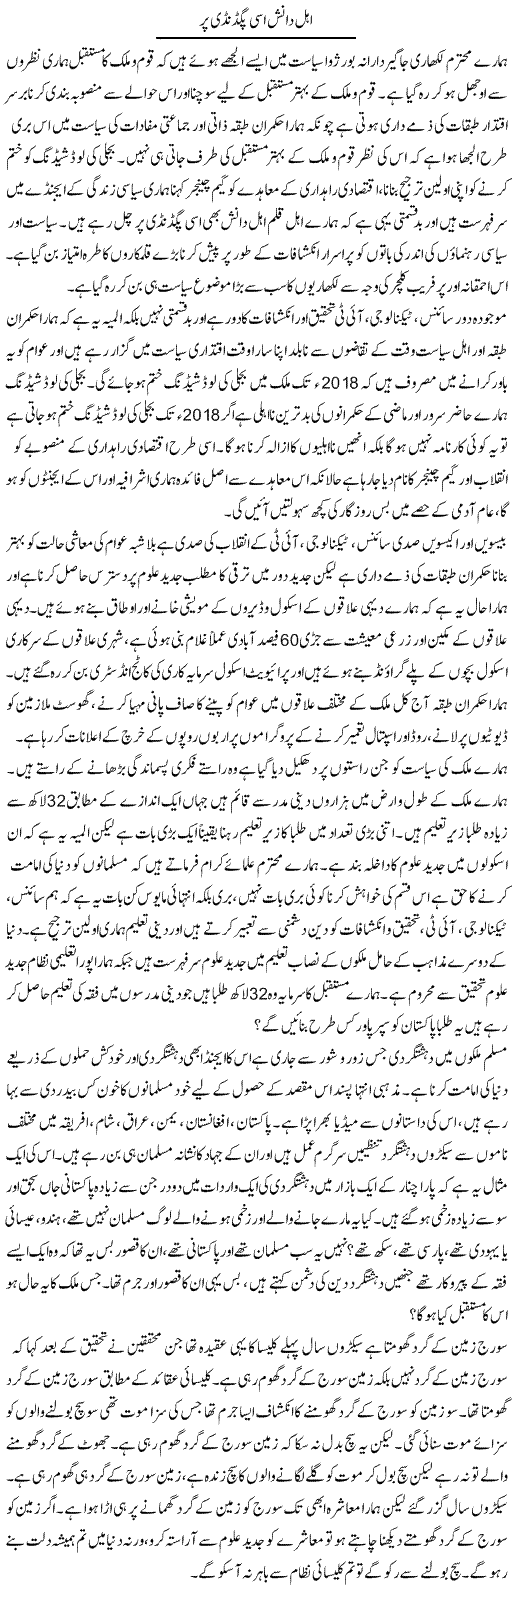 Ahal Danish Isi Pagdandi Par | Zahir Akhter Bedi | Daily Urdu Columns